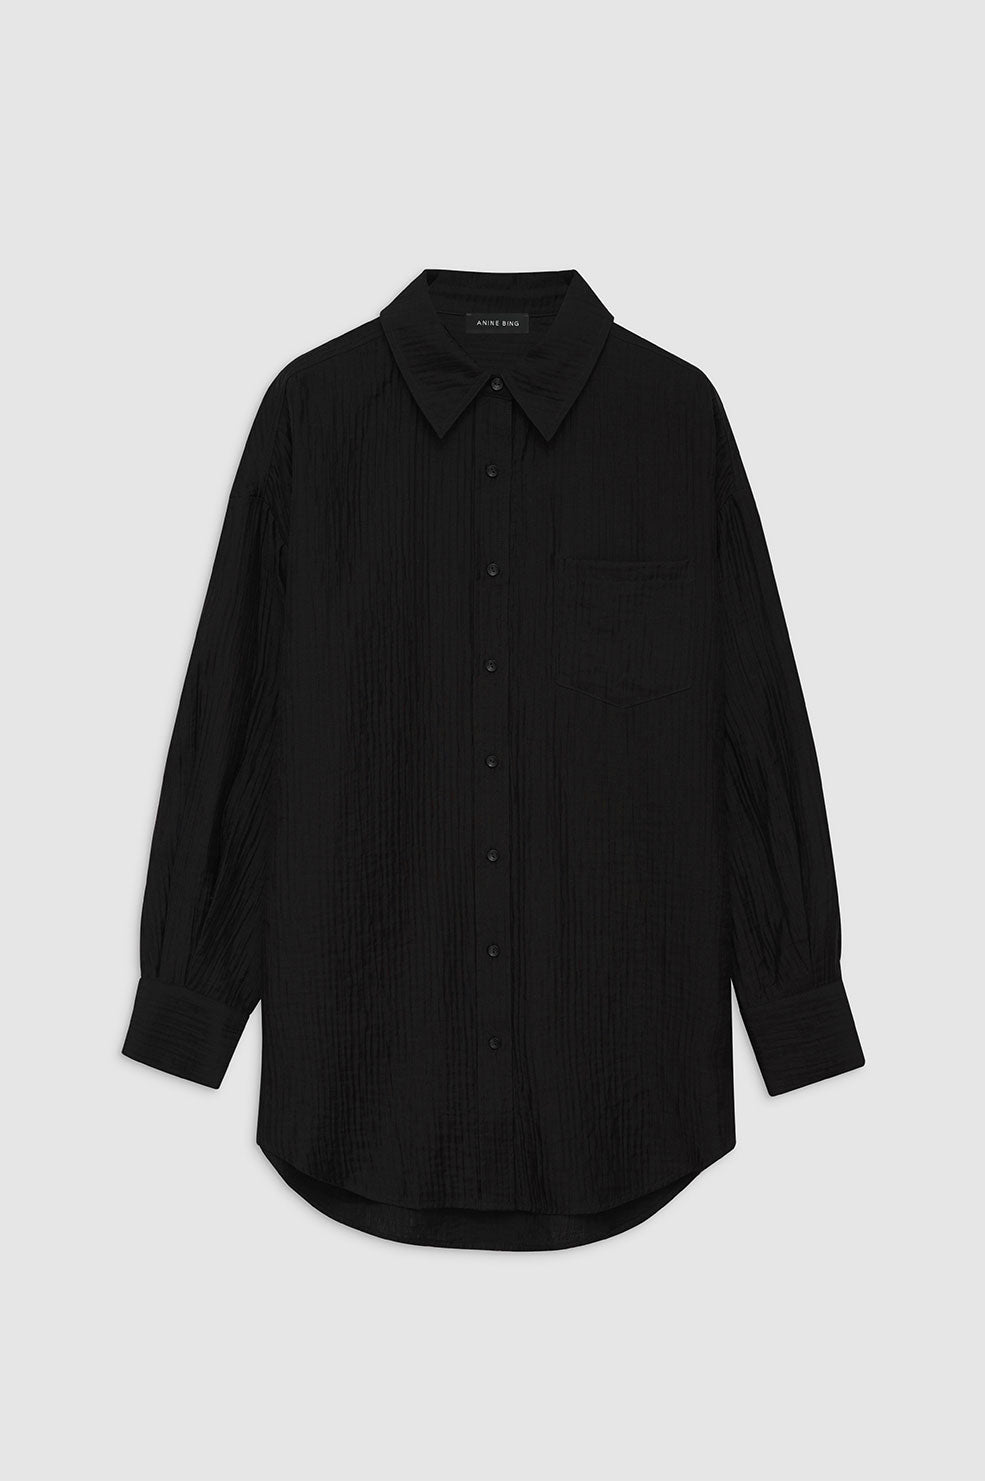 ANINE BING Tio Shirt - Black - Front View